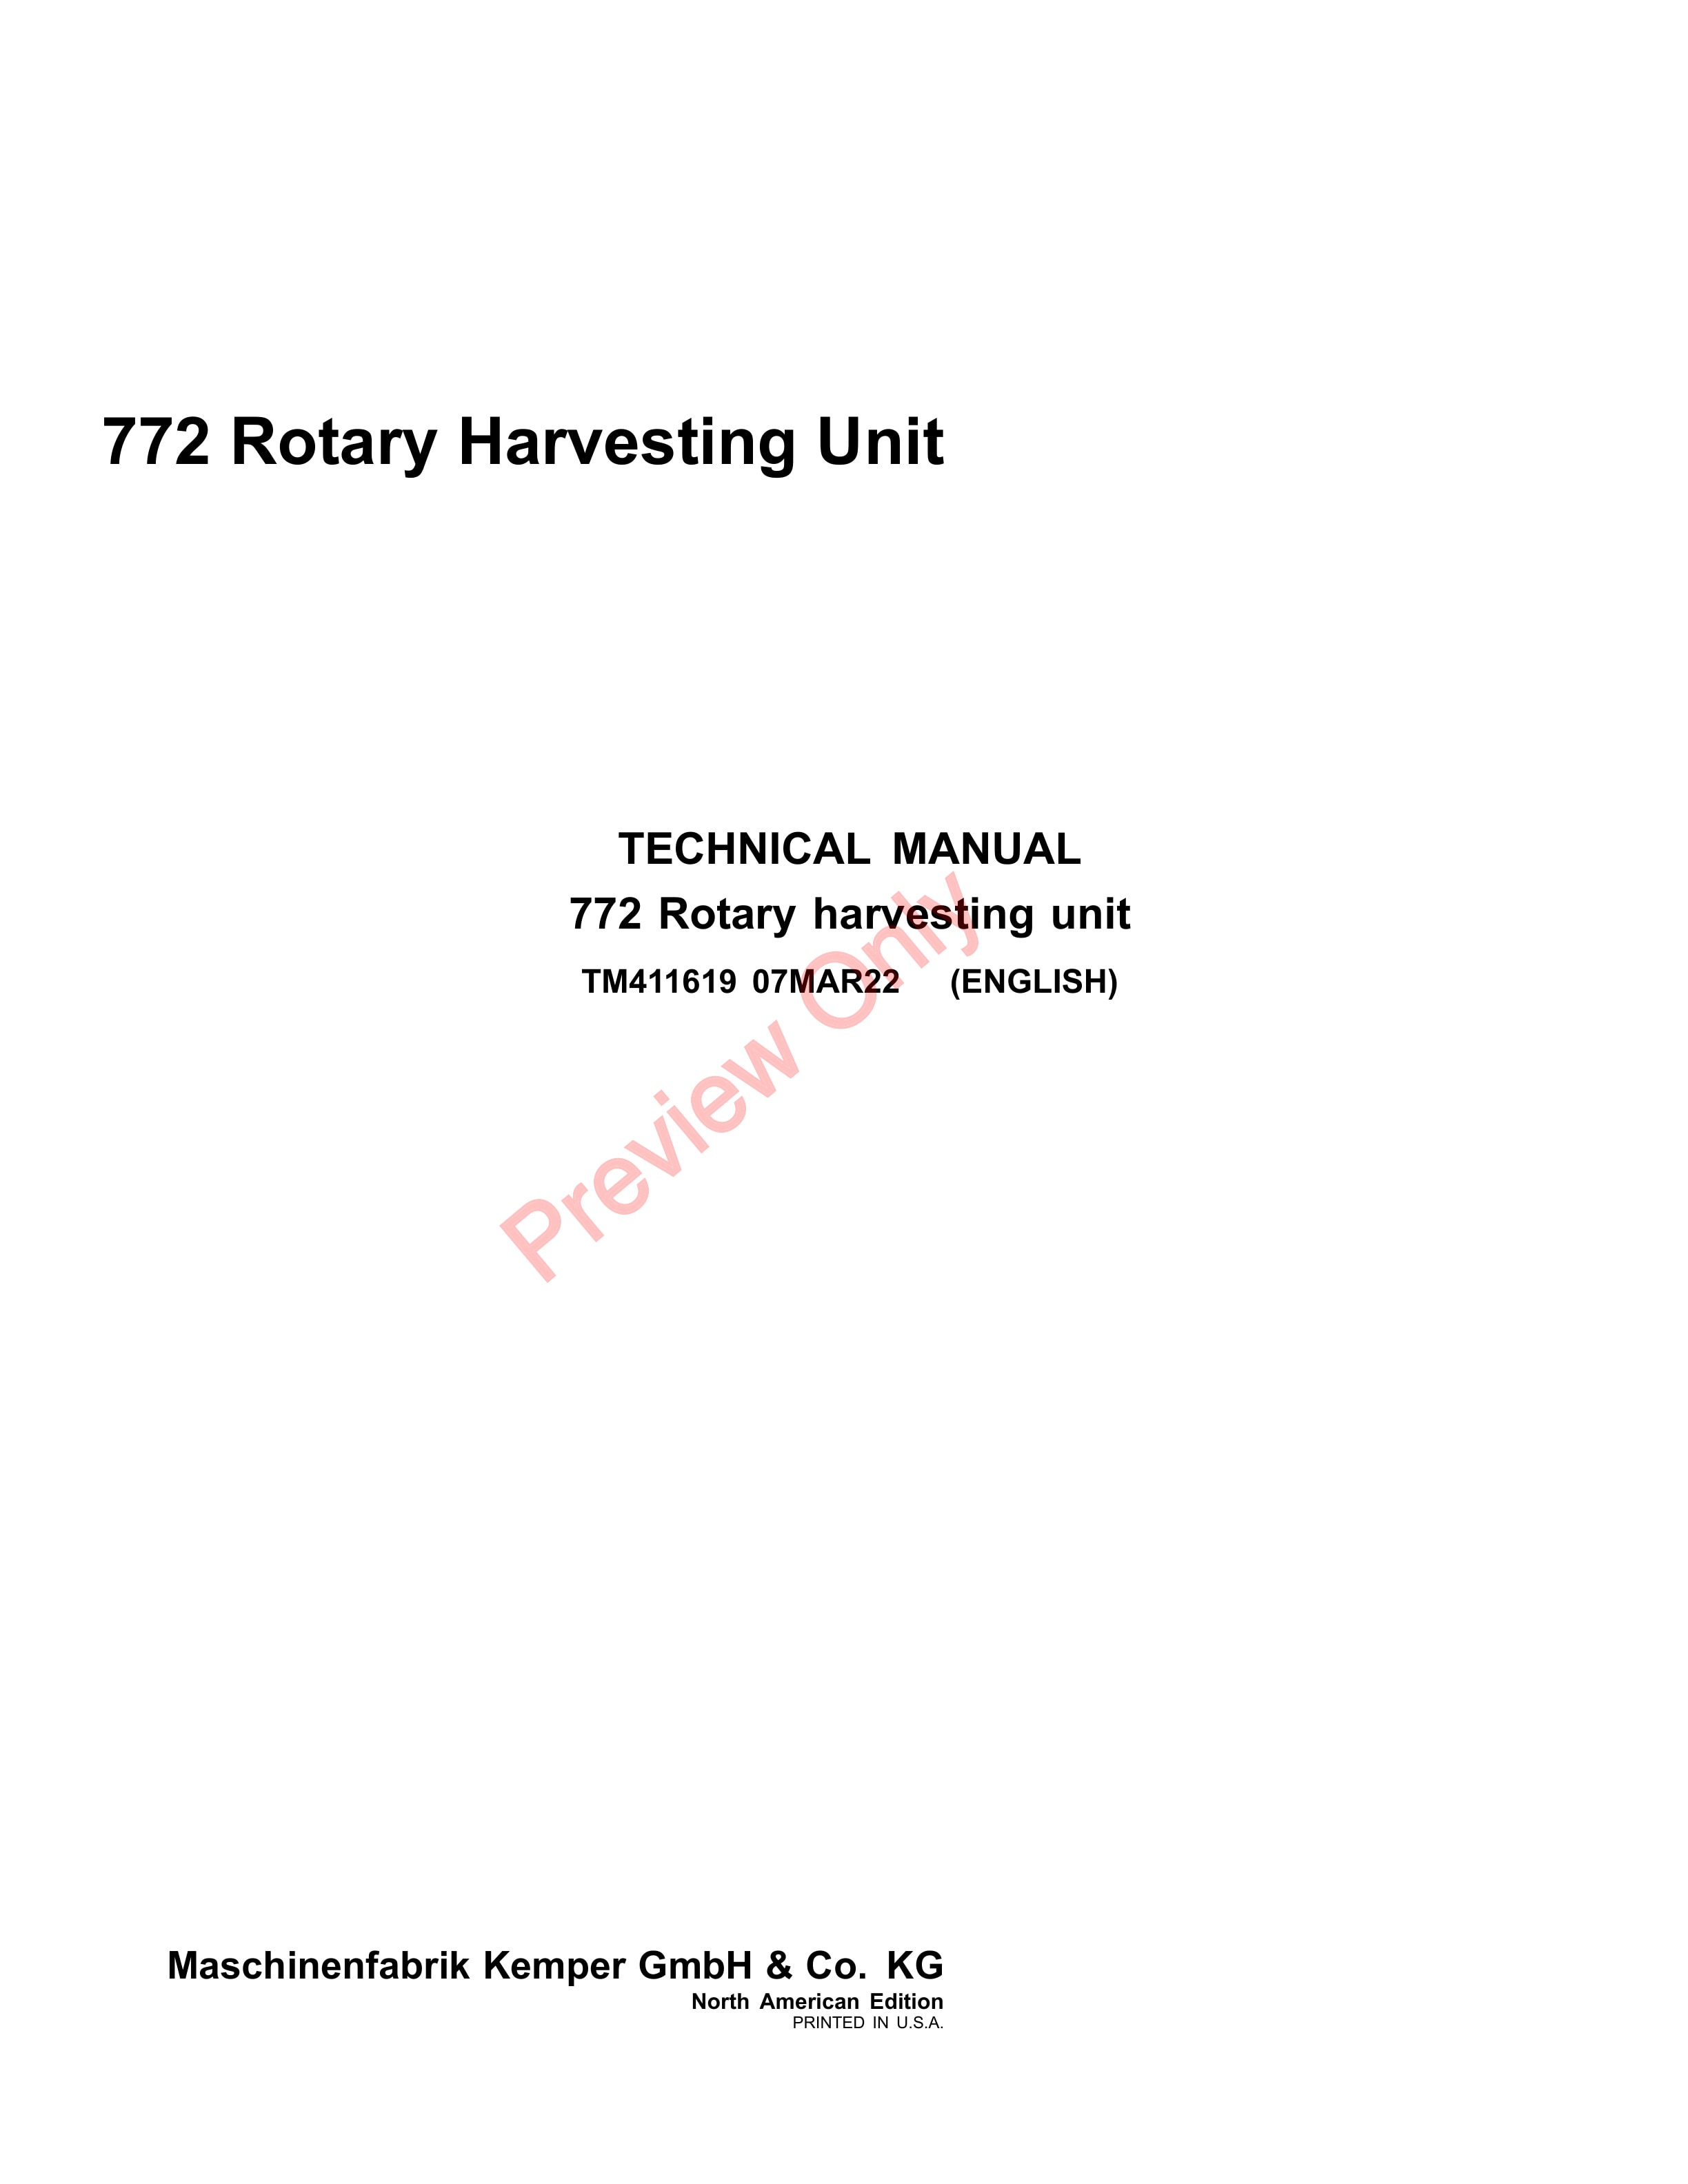 John Deere 772 Rotary Harvesting Unit North America English Technical Manual TM411619 07MAR22 1